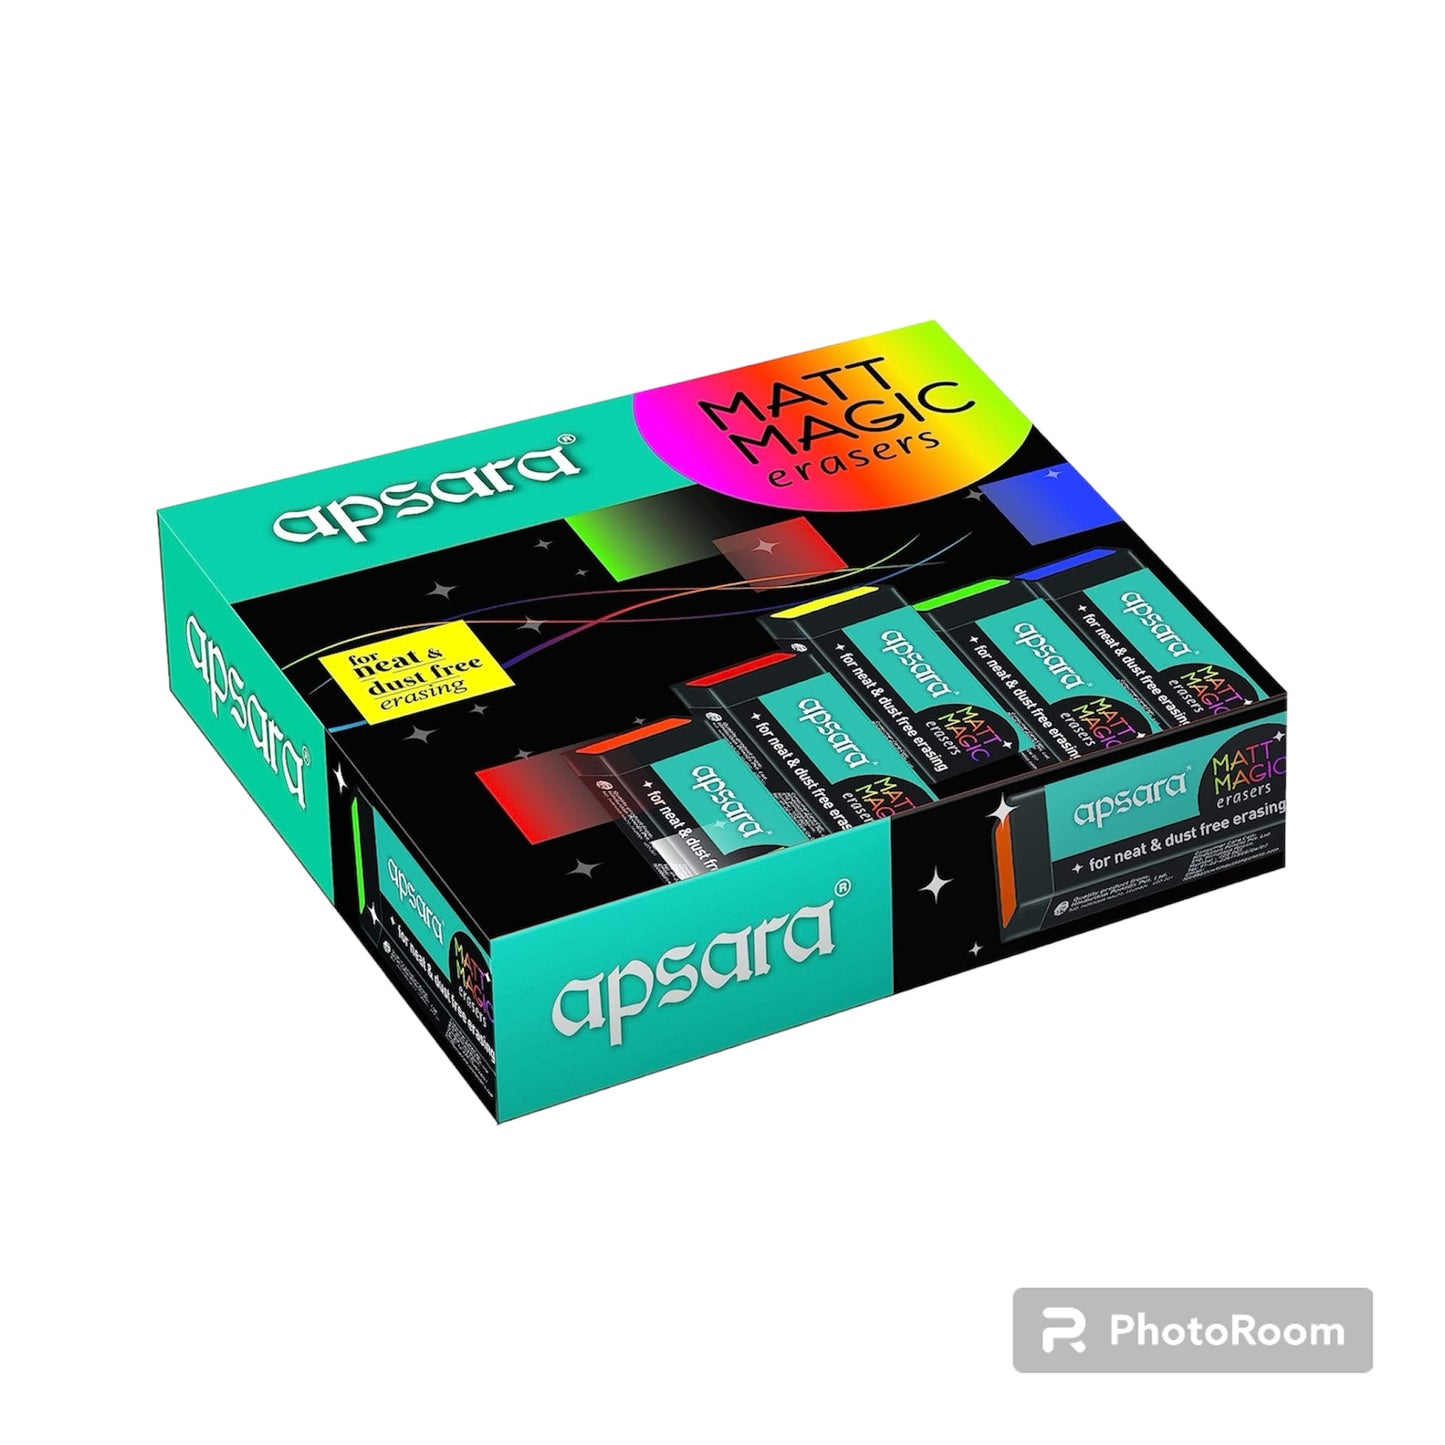 Apsara Matt Magic Jumbo dust free Eraser Pack of 20pcs Box